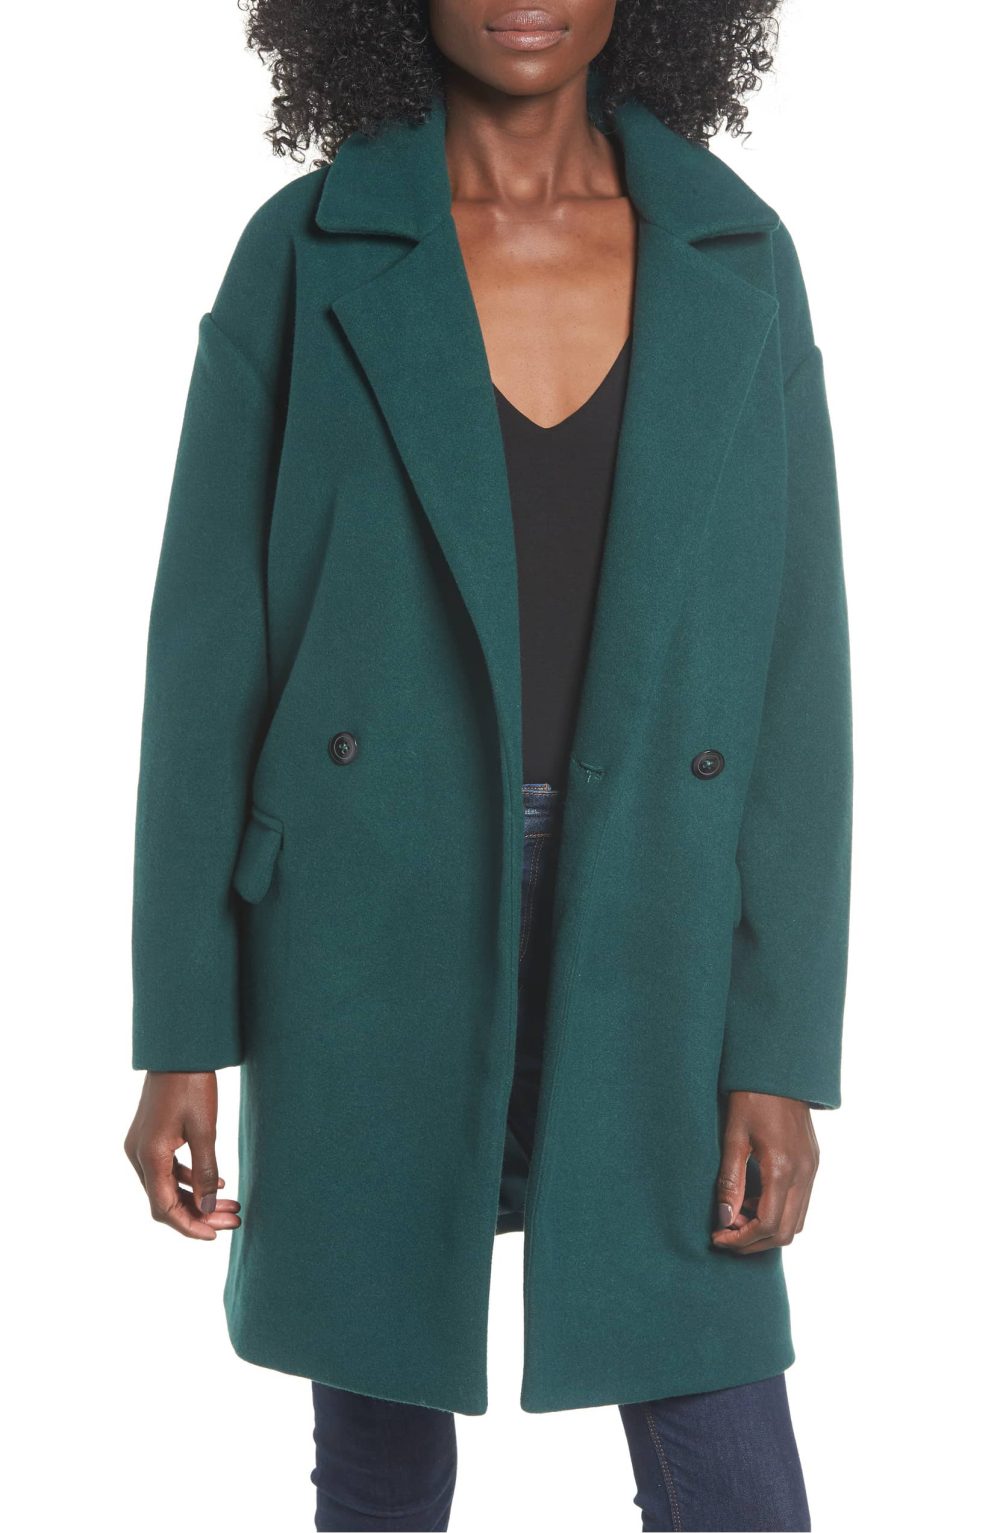 leith green coat